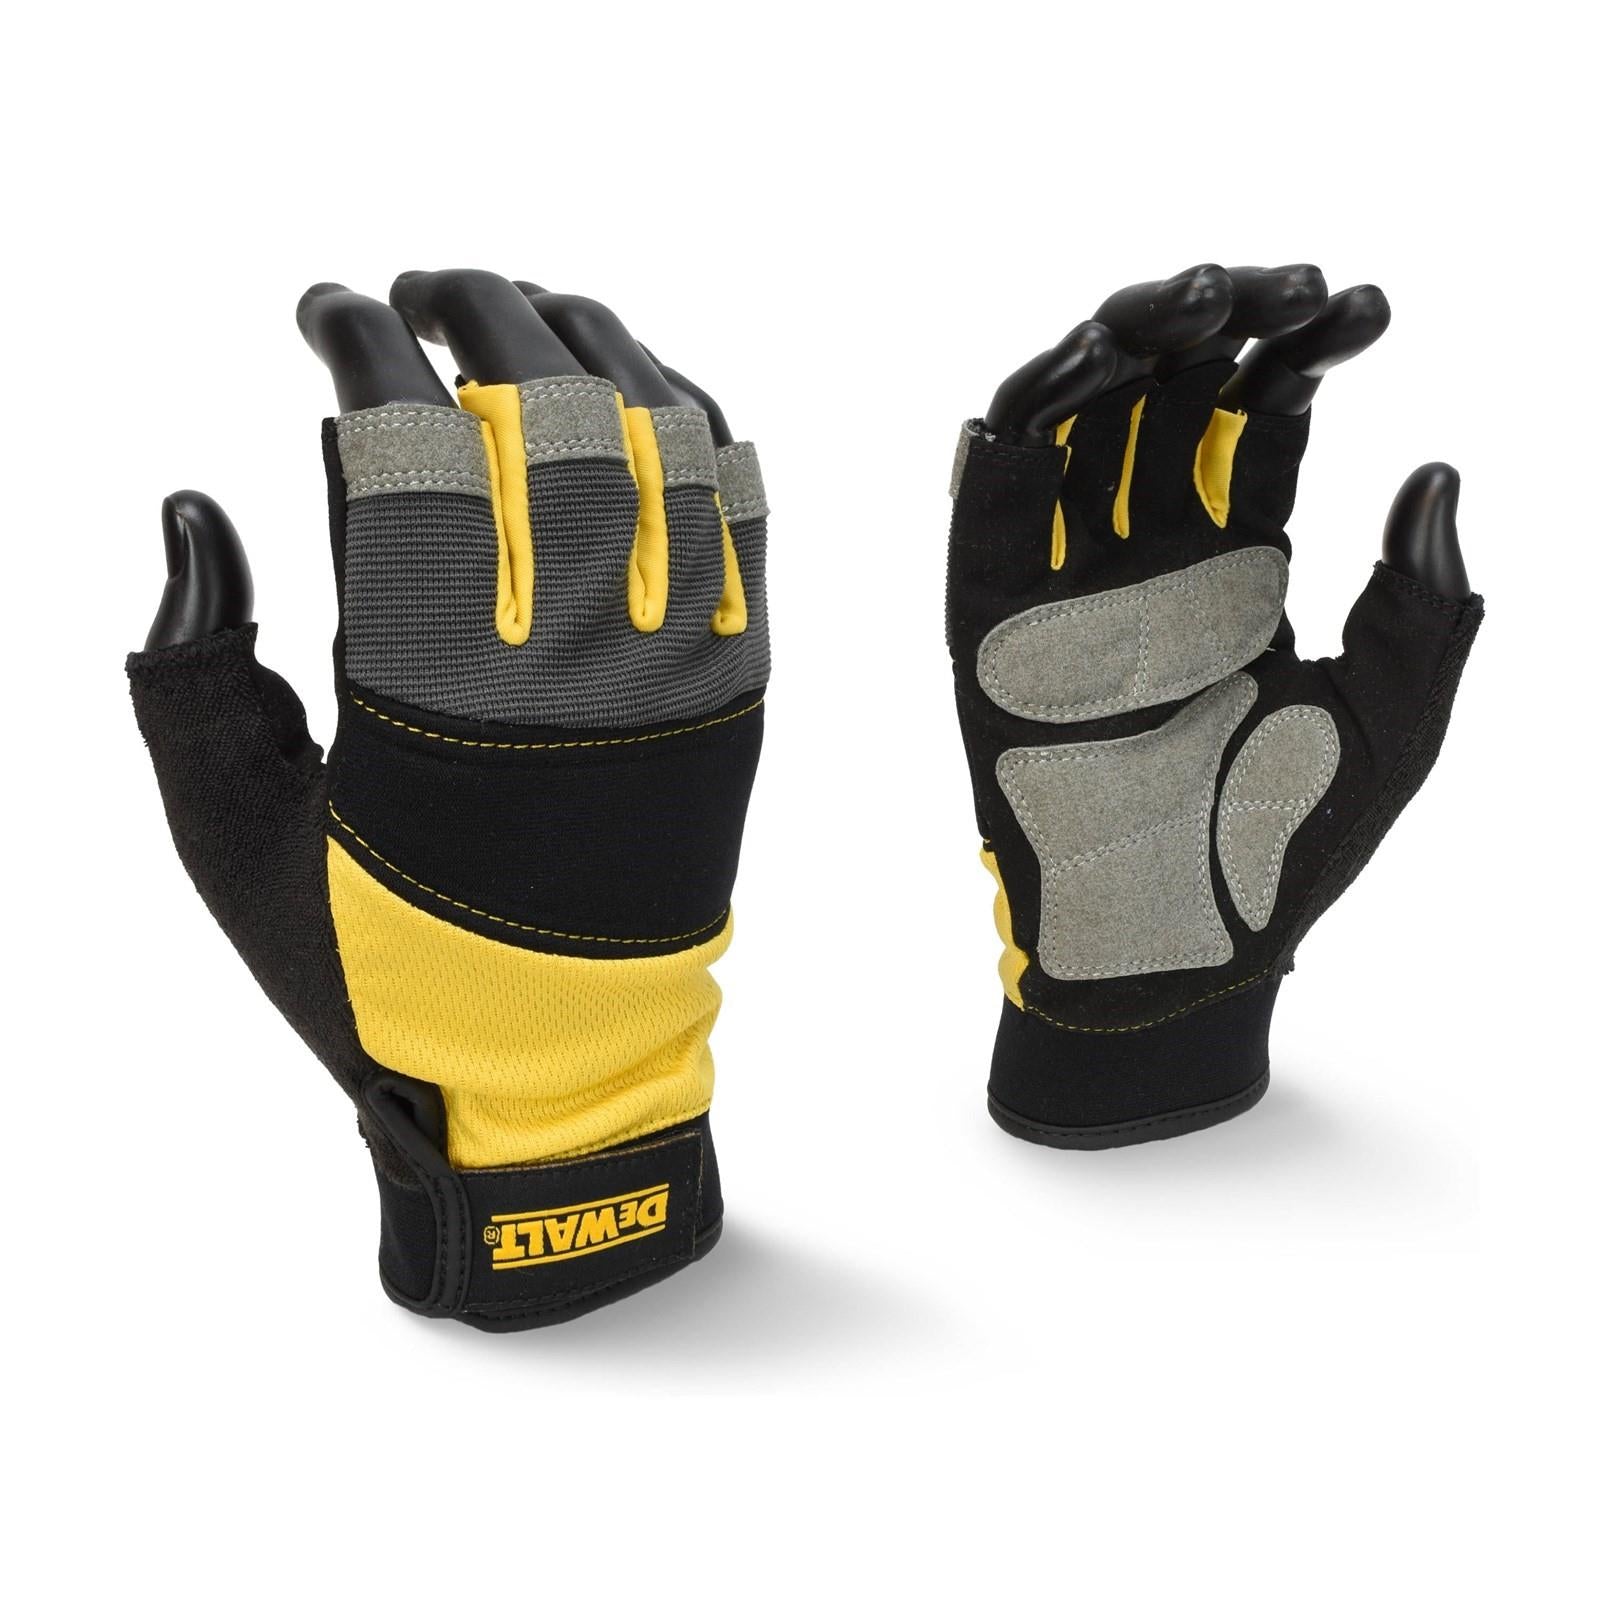 DeWalt Performance fingerless double-palm work glove #DPG213